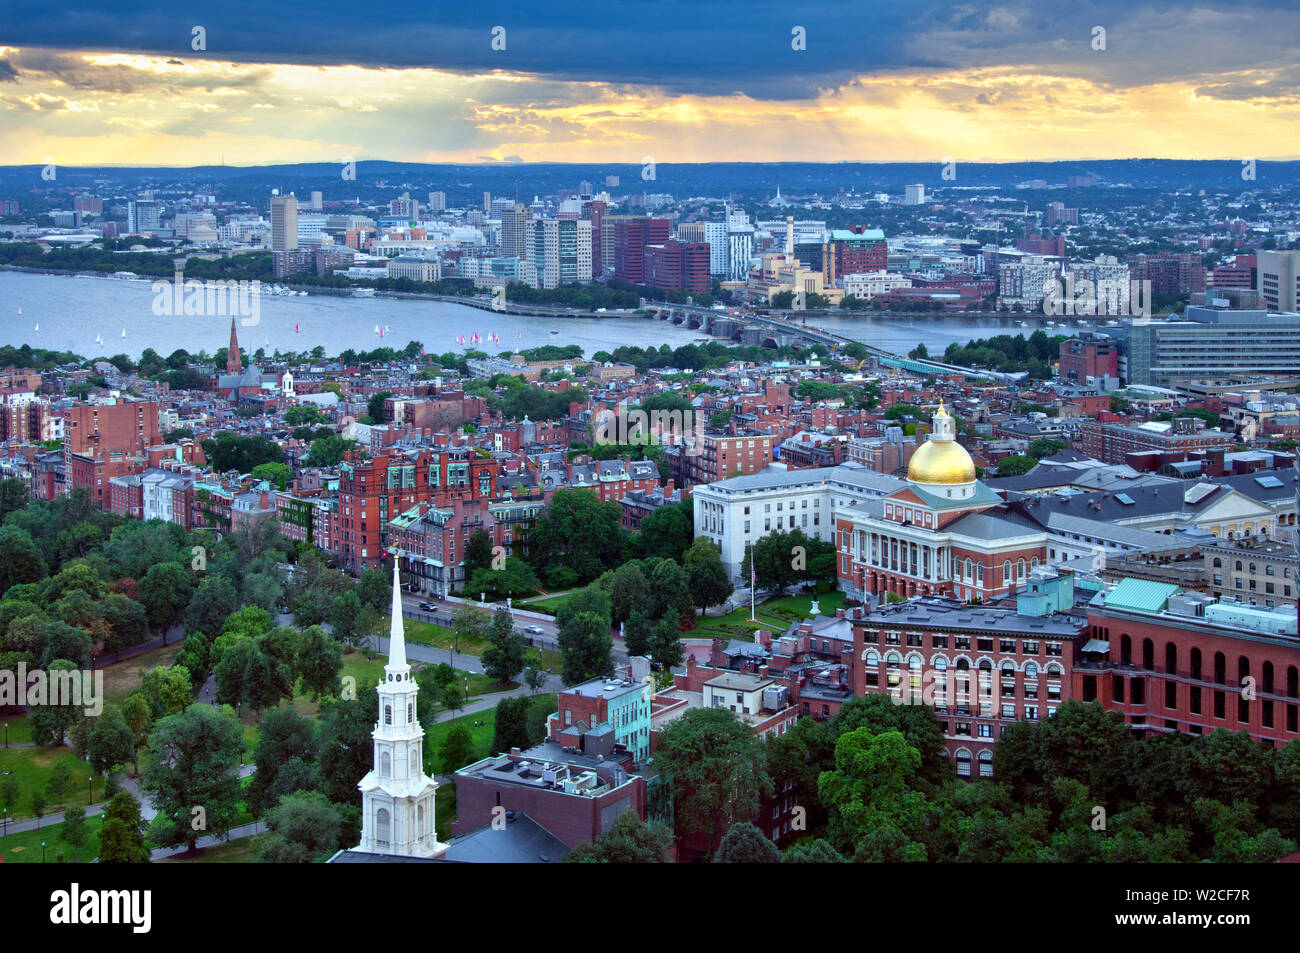 Massachusetts, Boston, membro House, Cambridge, Charles River, Old South Meeting House Steeple Foto Stock